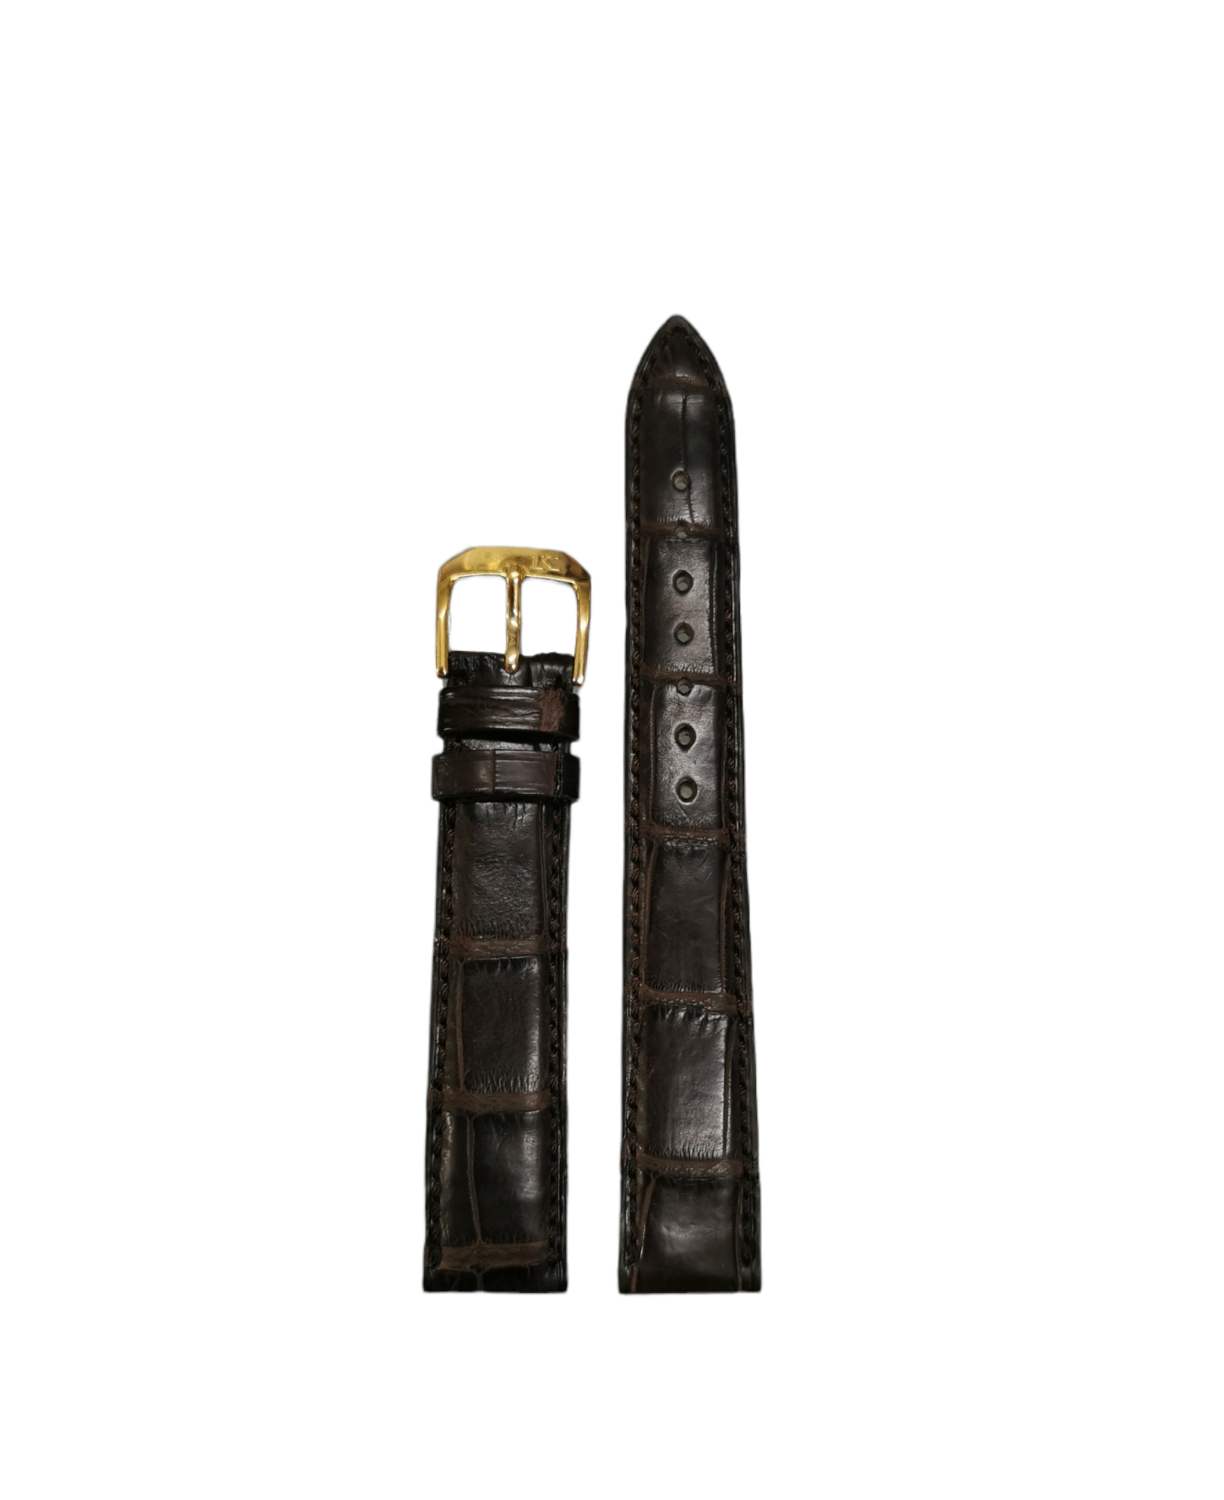 Original Gübelin Uhrenband, Alligator, Mattes Schokoladenbraun, 16 mm Breite